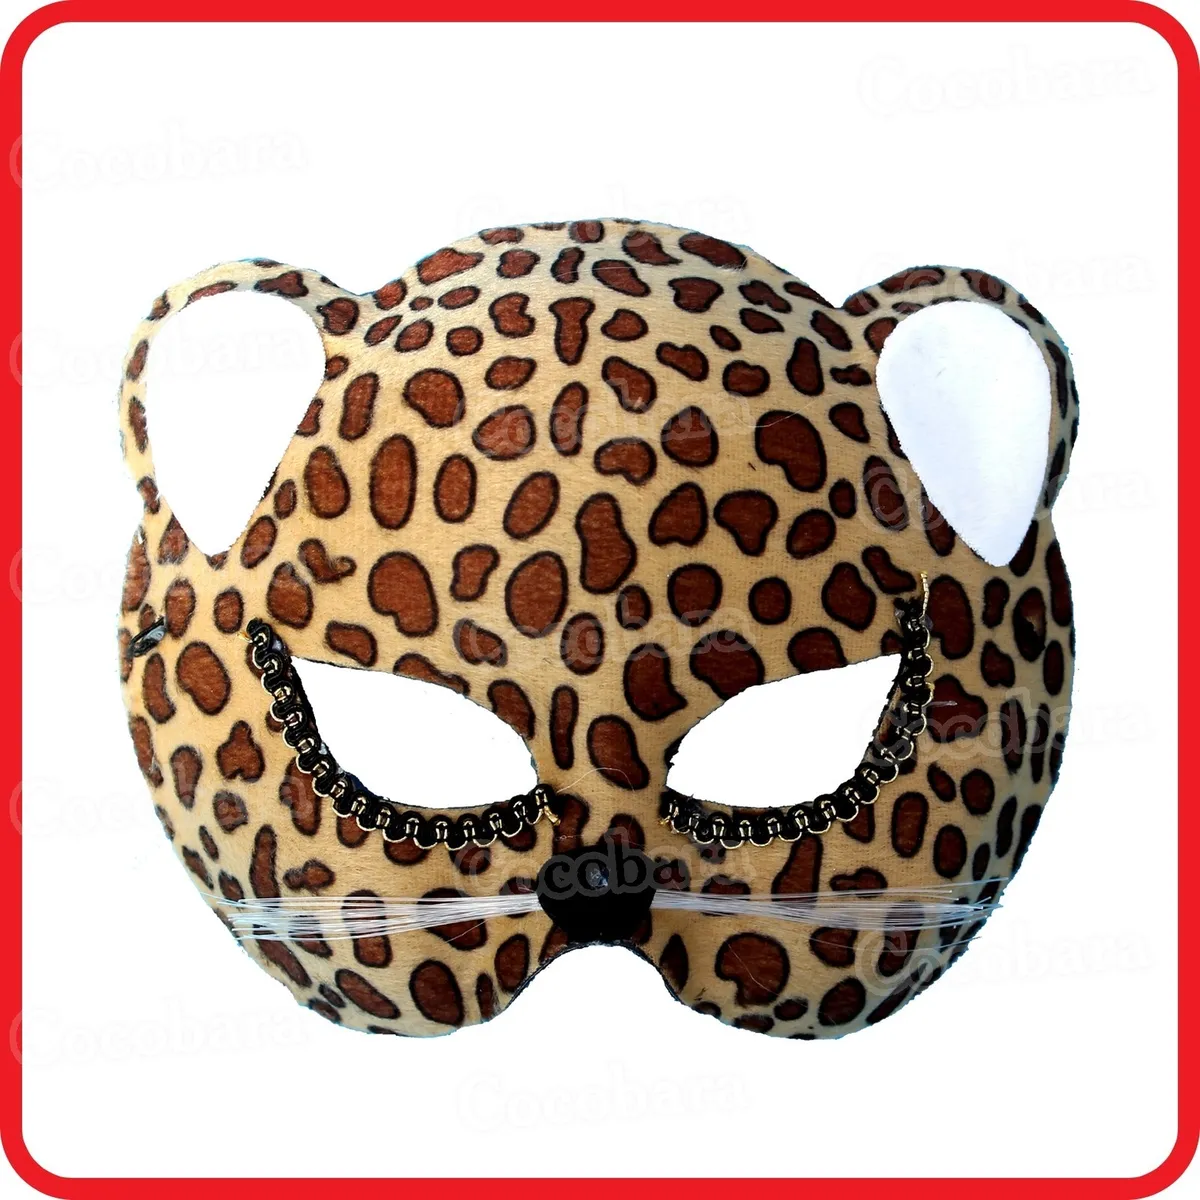 Leopard mask panther jaguar cougar puma big cat mountain lion